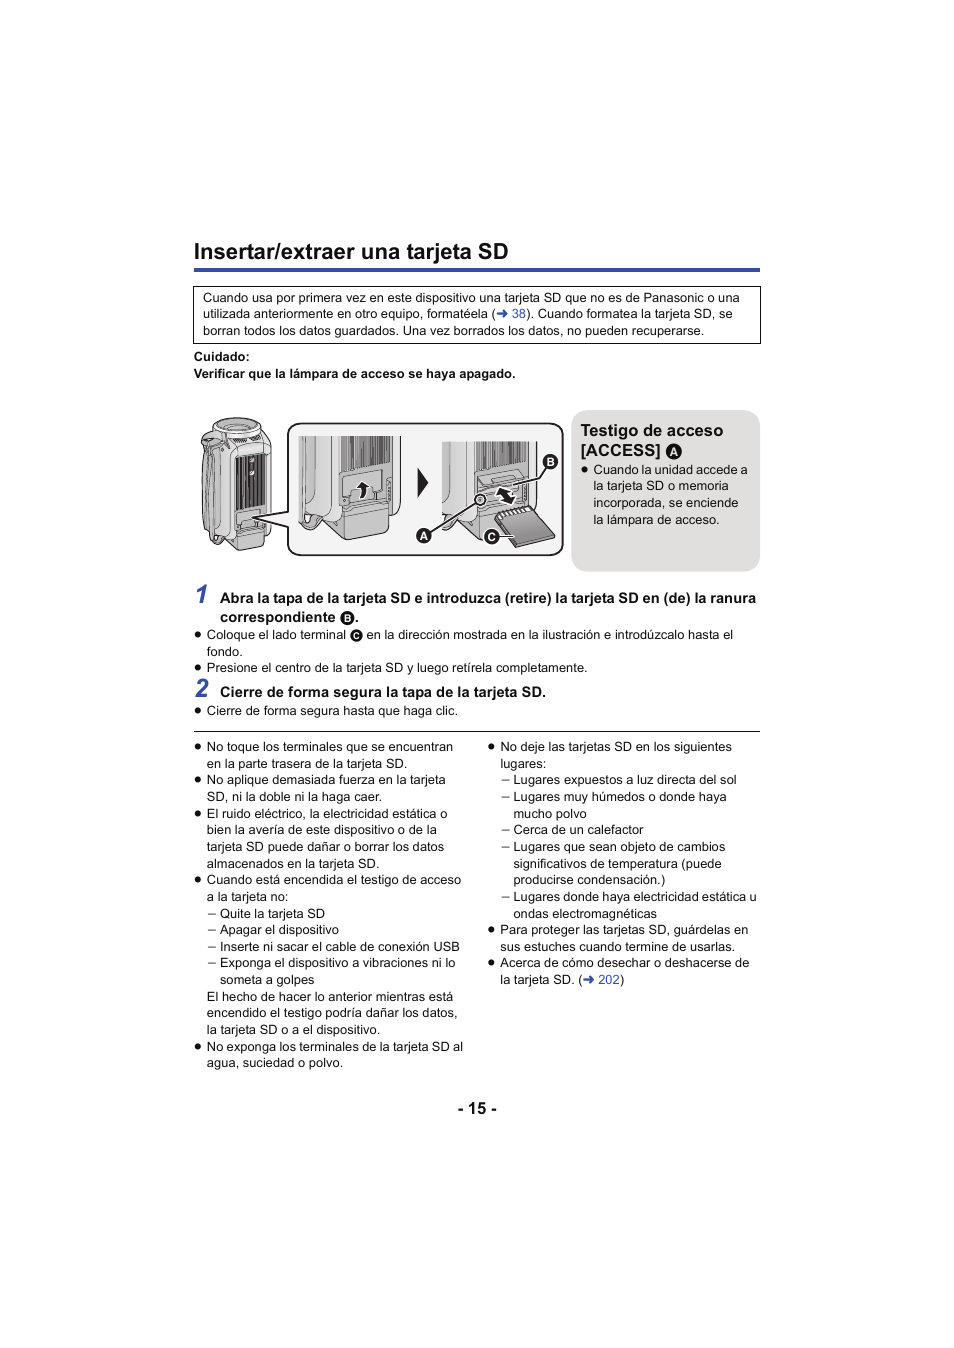 Insertar/extraer una tarjeta sd, Testigo de acceso [access] a | Panasonic HCV250EC Manual del usuario | Página 15 / 214